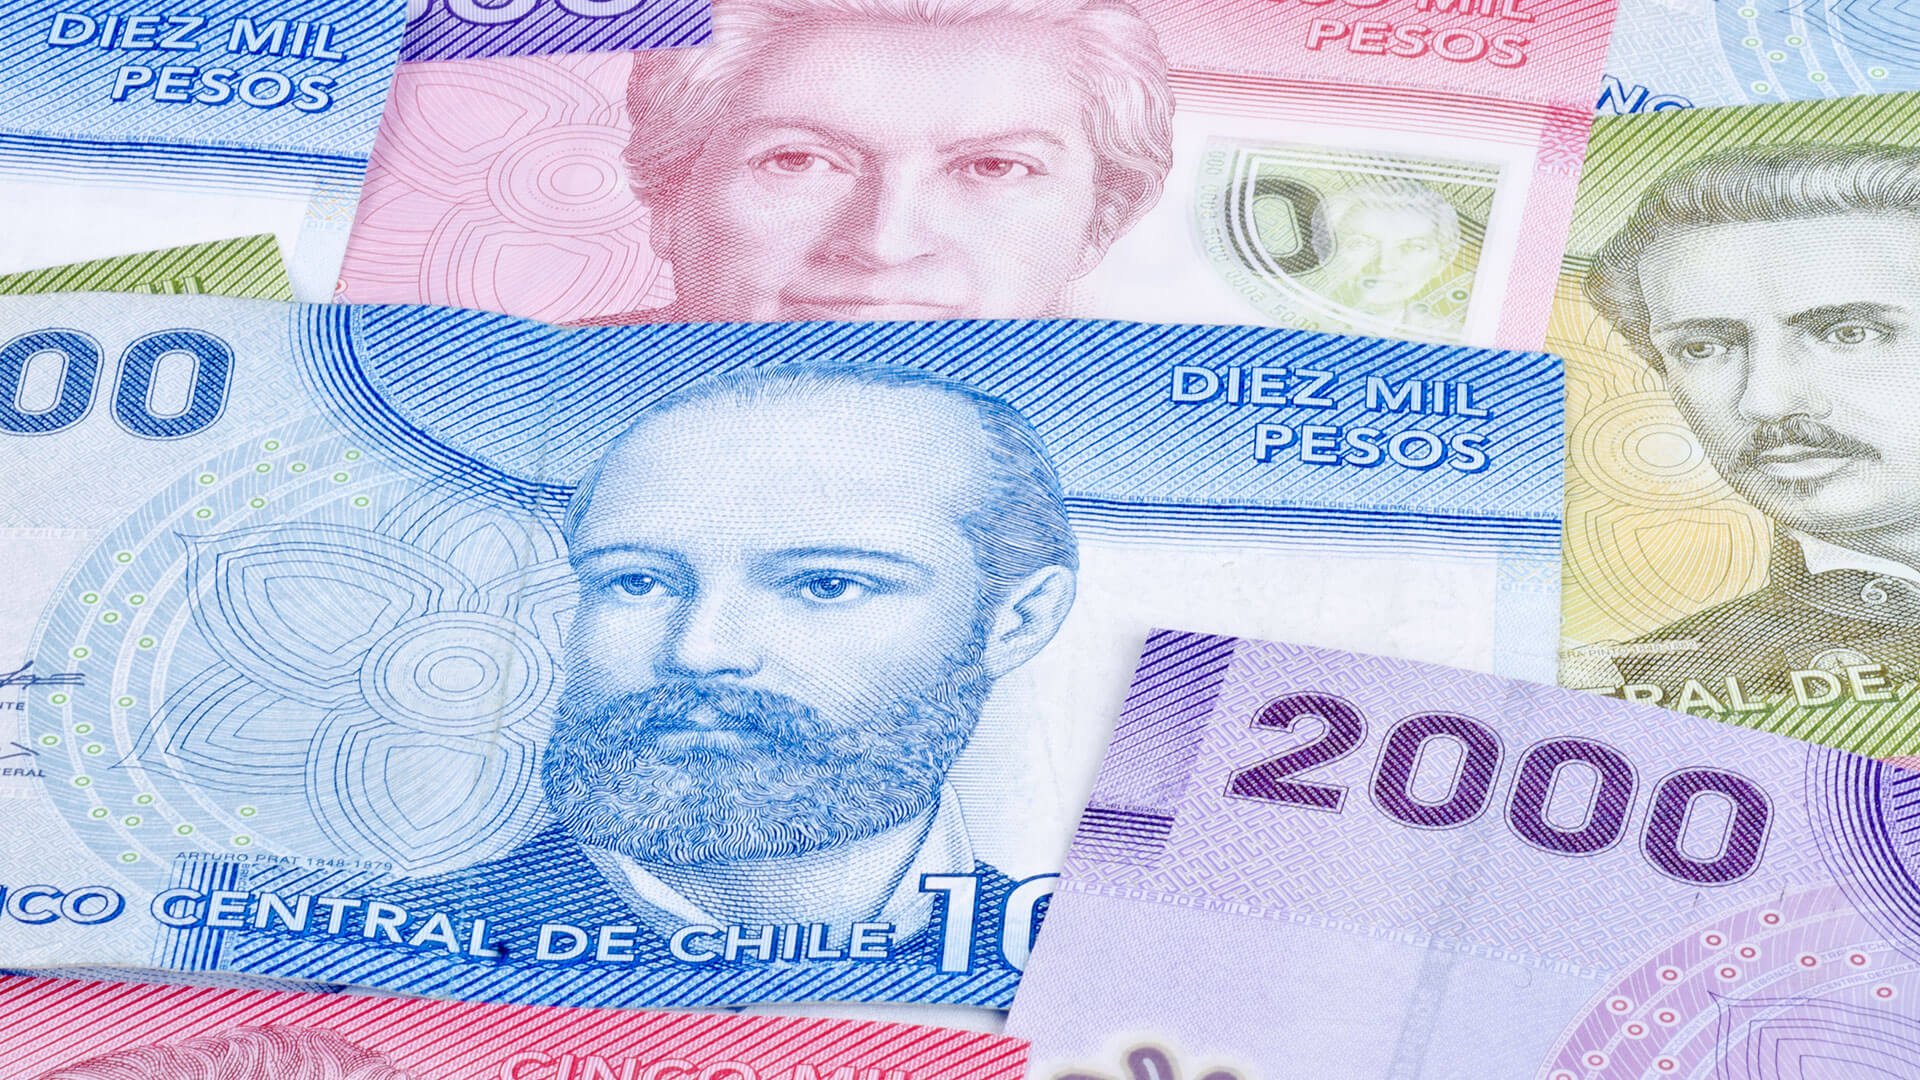 Chilean pesos banknotes